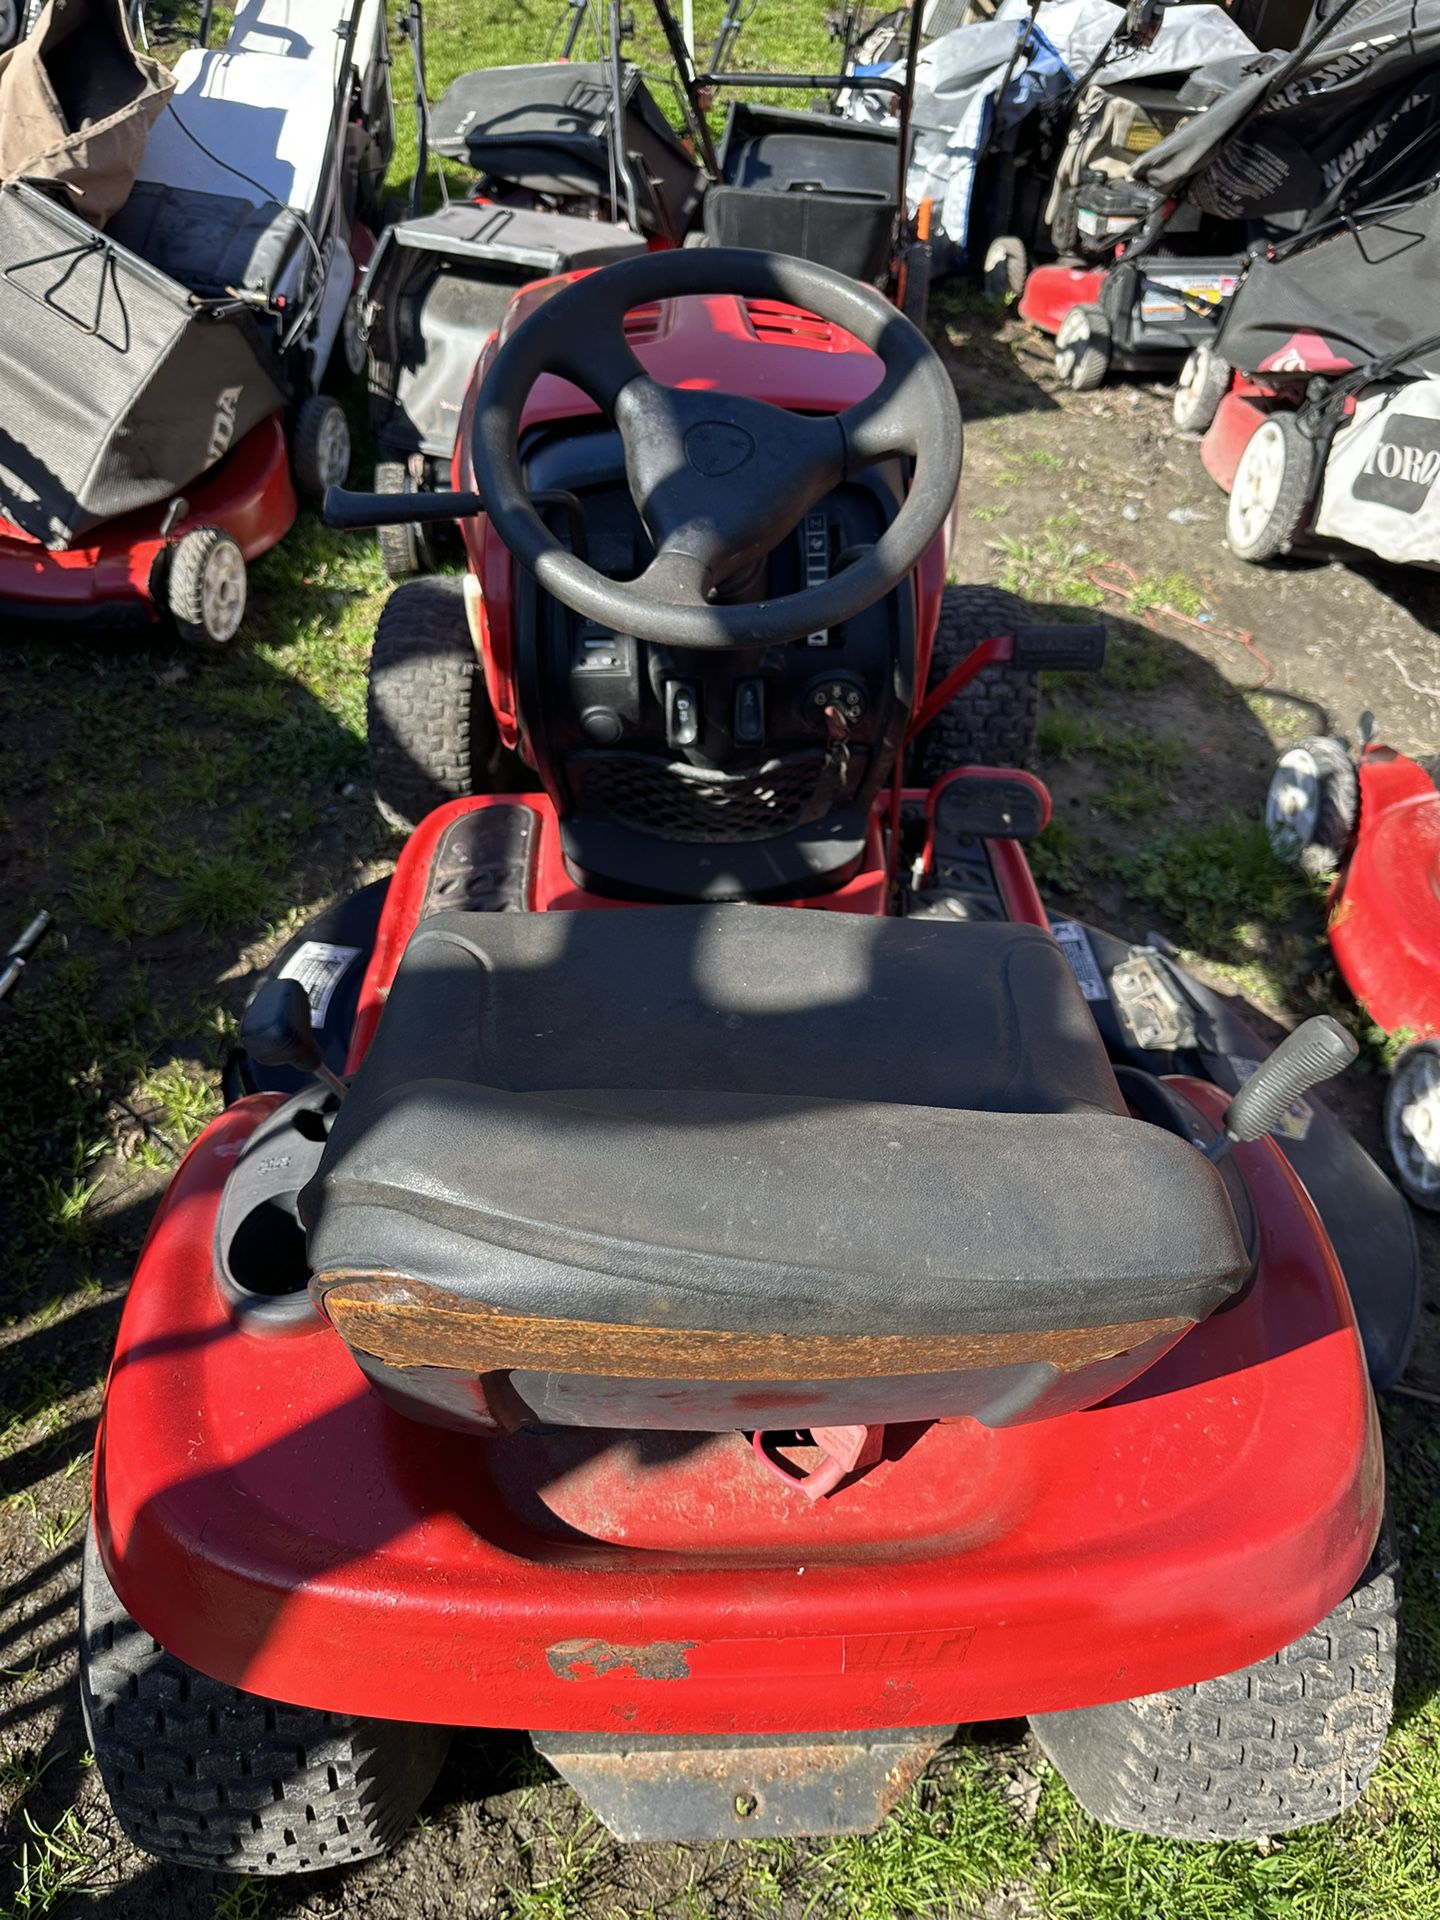 Troy Bilt Riding Lawnmower For Sale In Virginia Beach Va Offerup